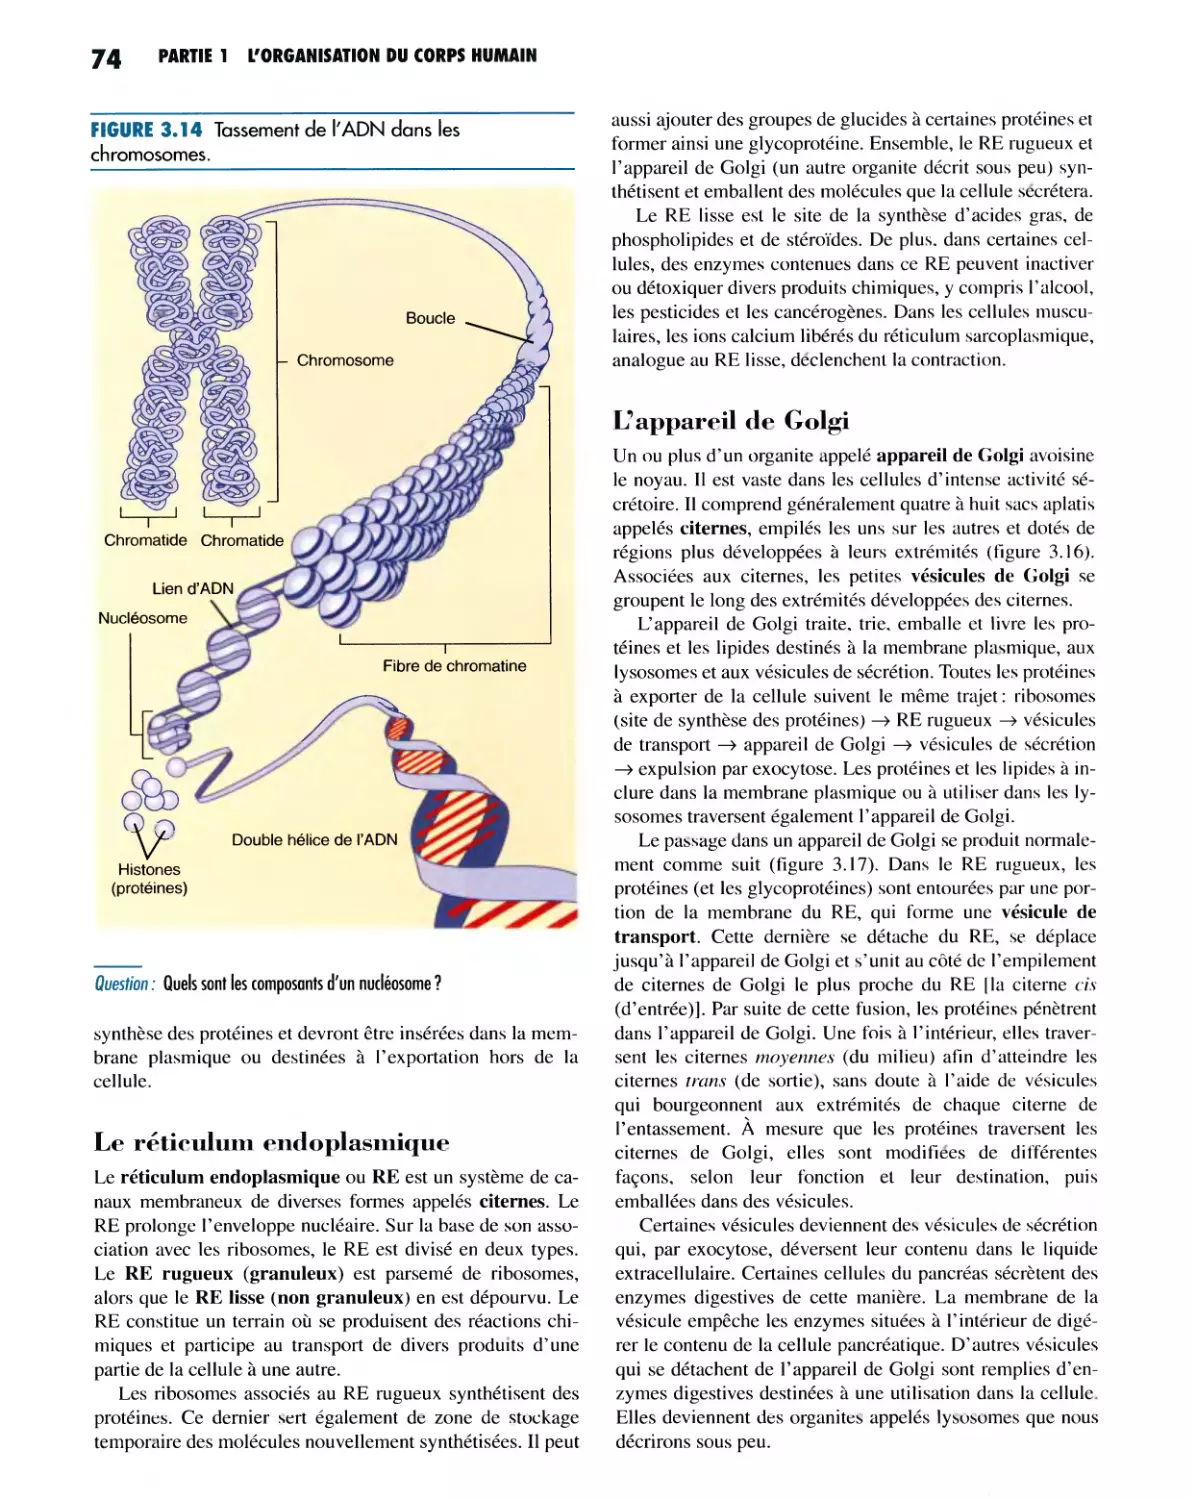 Le réticulum endoplasmique
L'appareil de Golgi